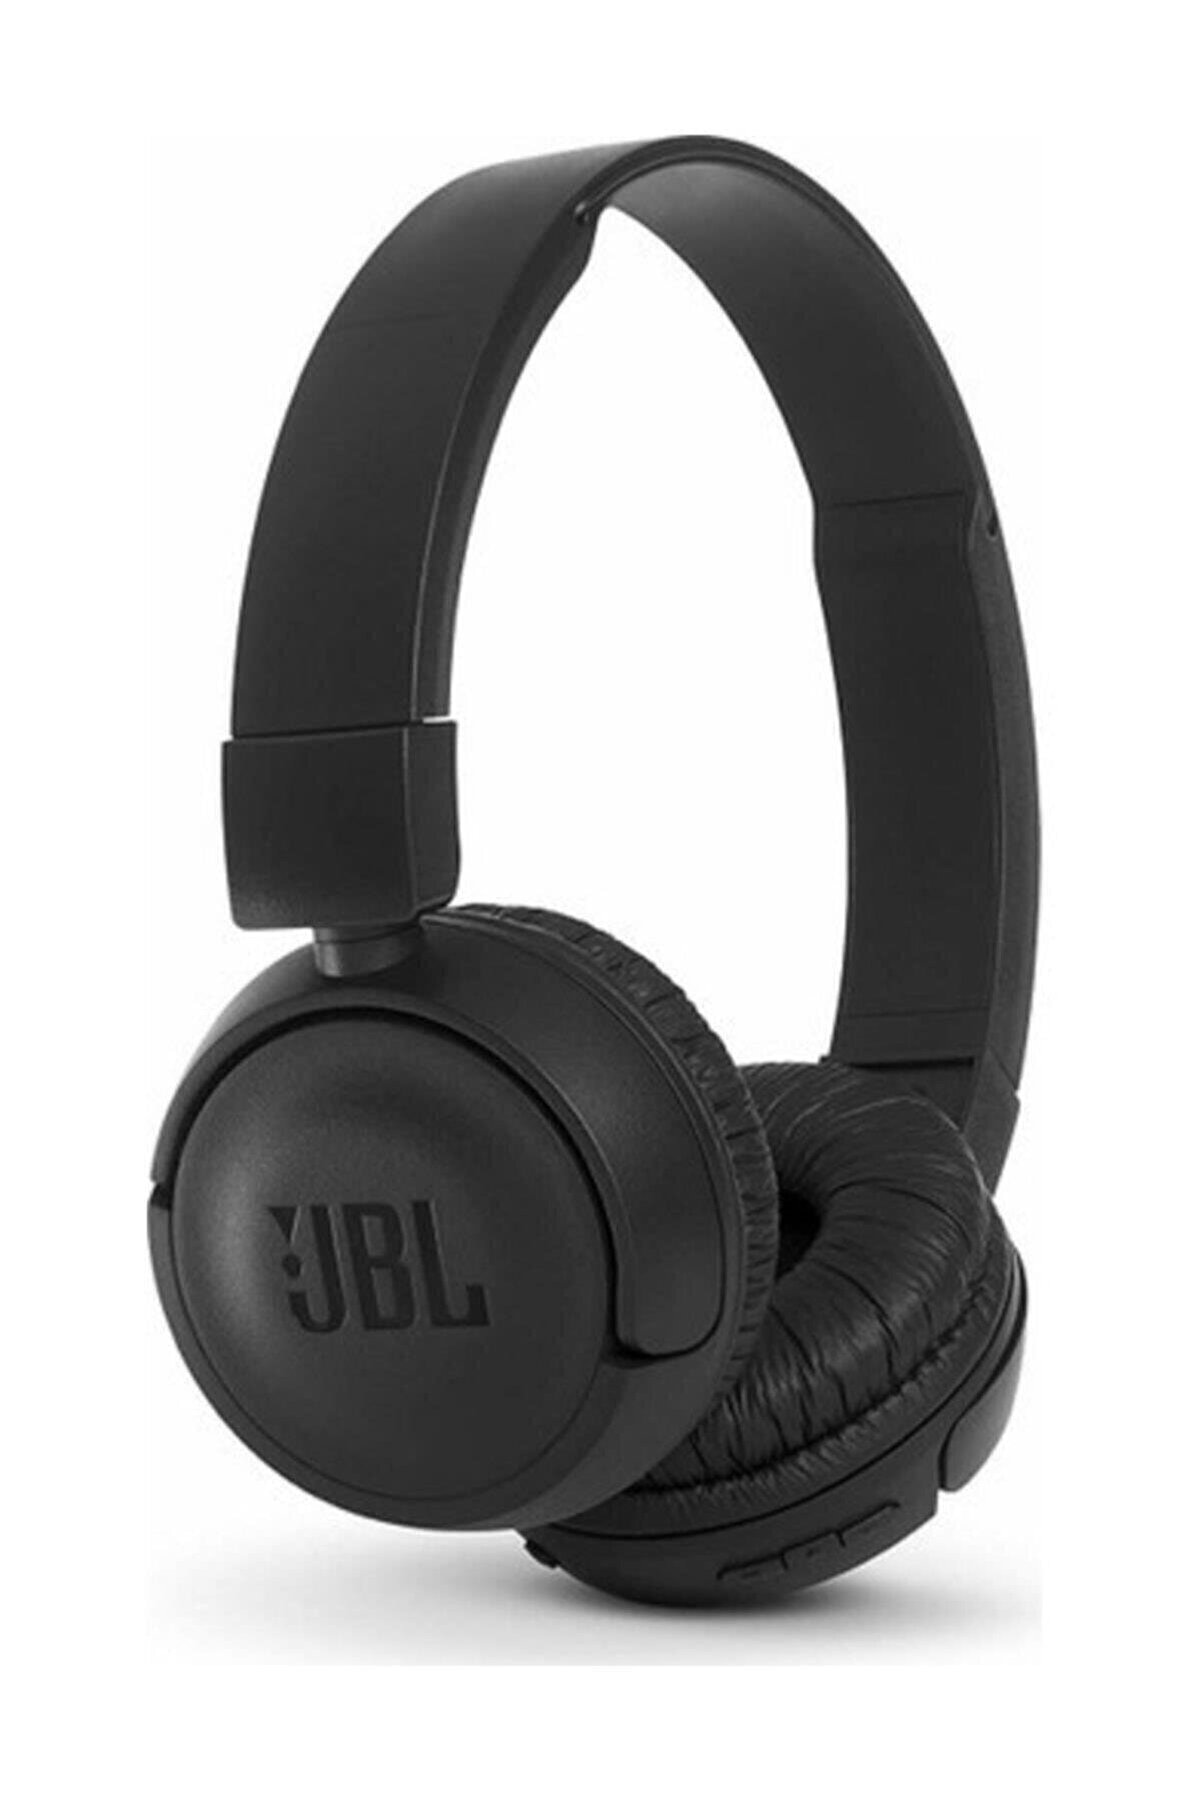 JBL T460BT Kulaküstü Kablosuz Kulaklık - Siyah